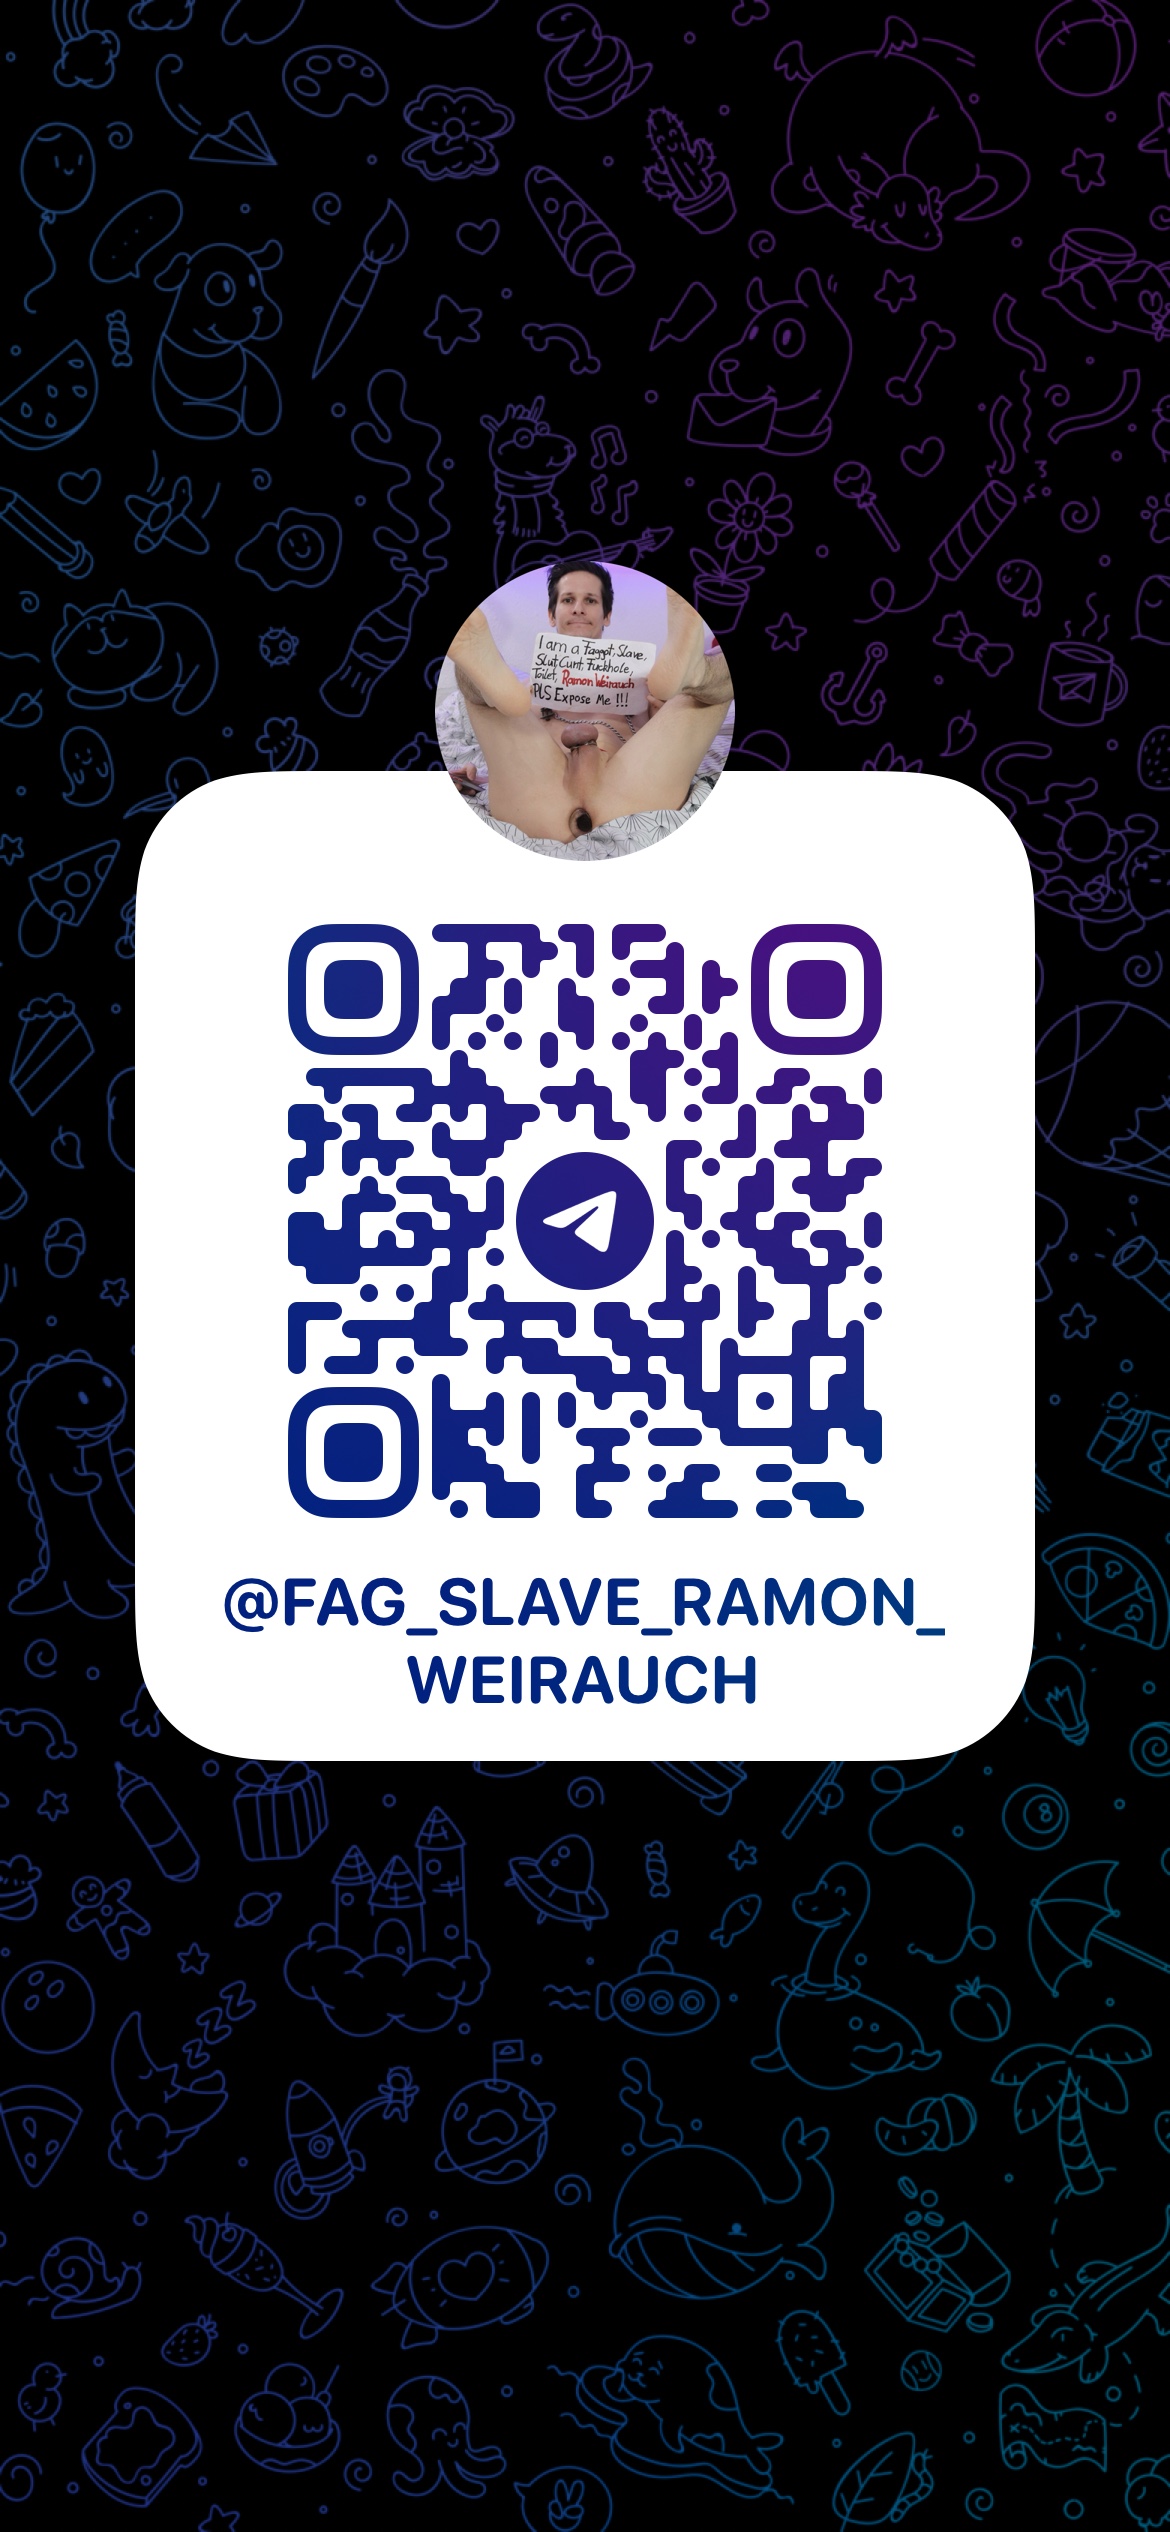 I am a Slave / f*g. Check my Telegram pls